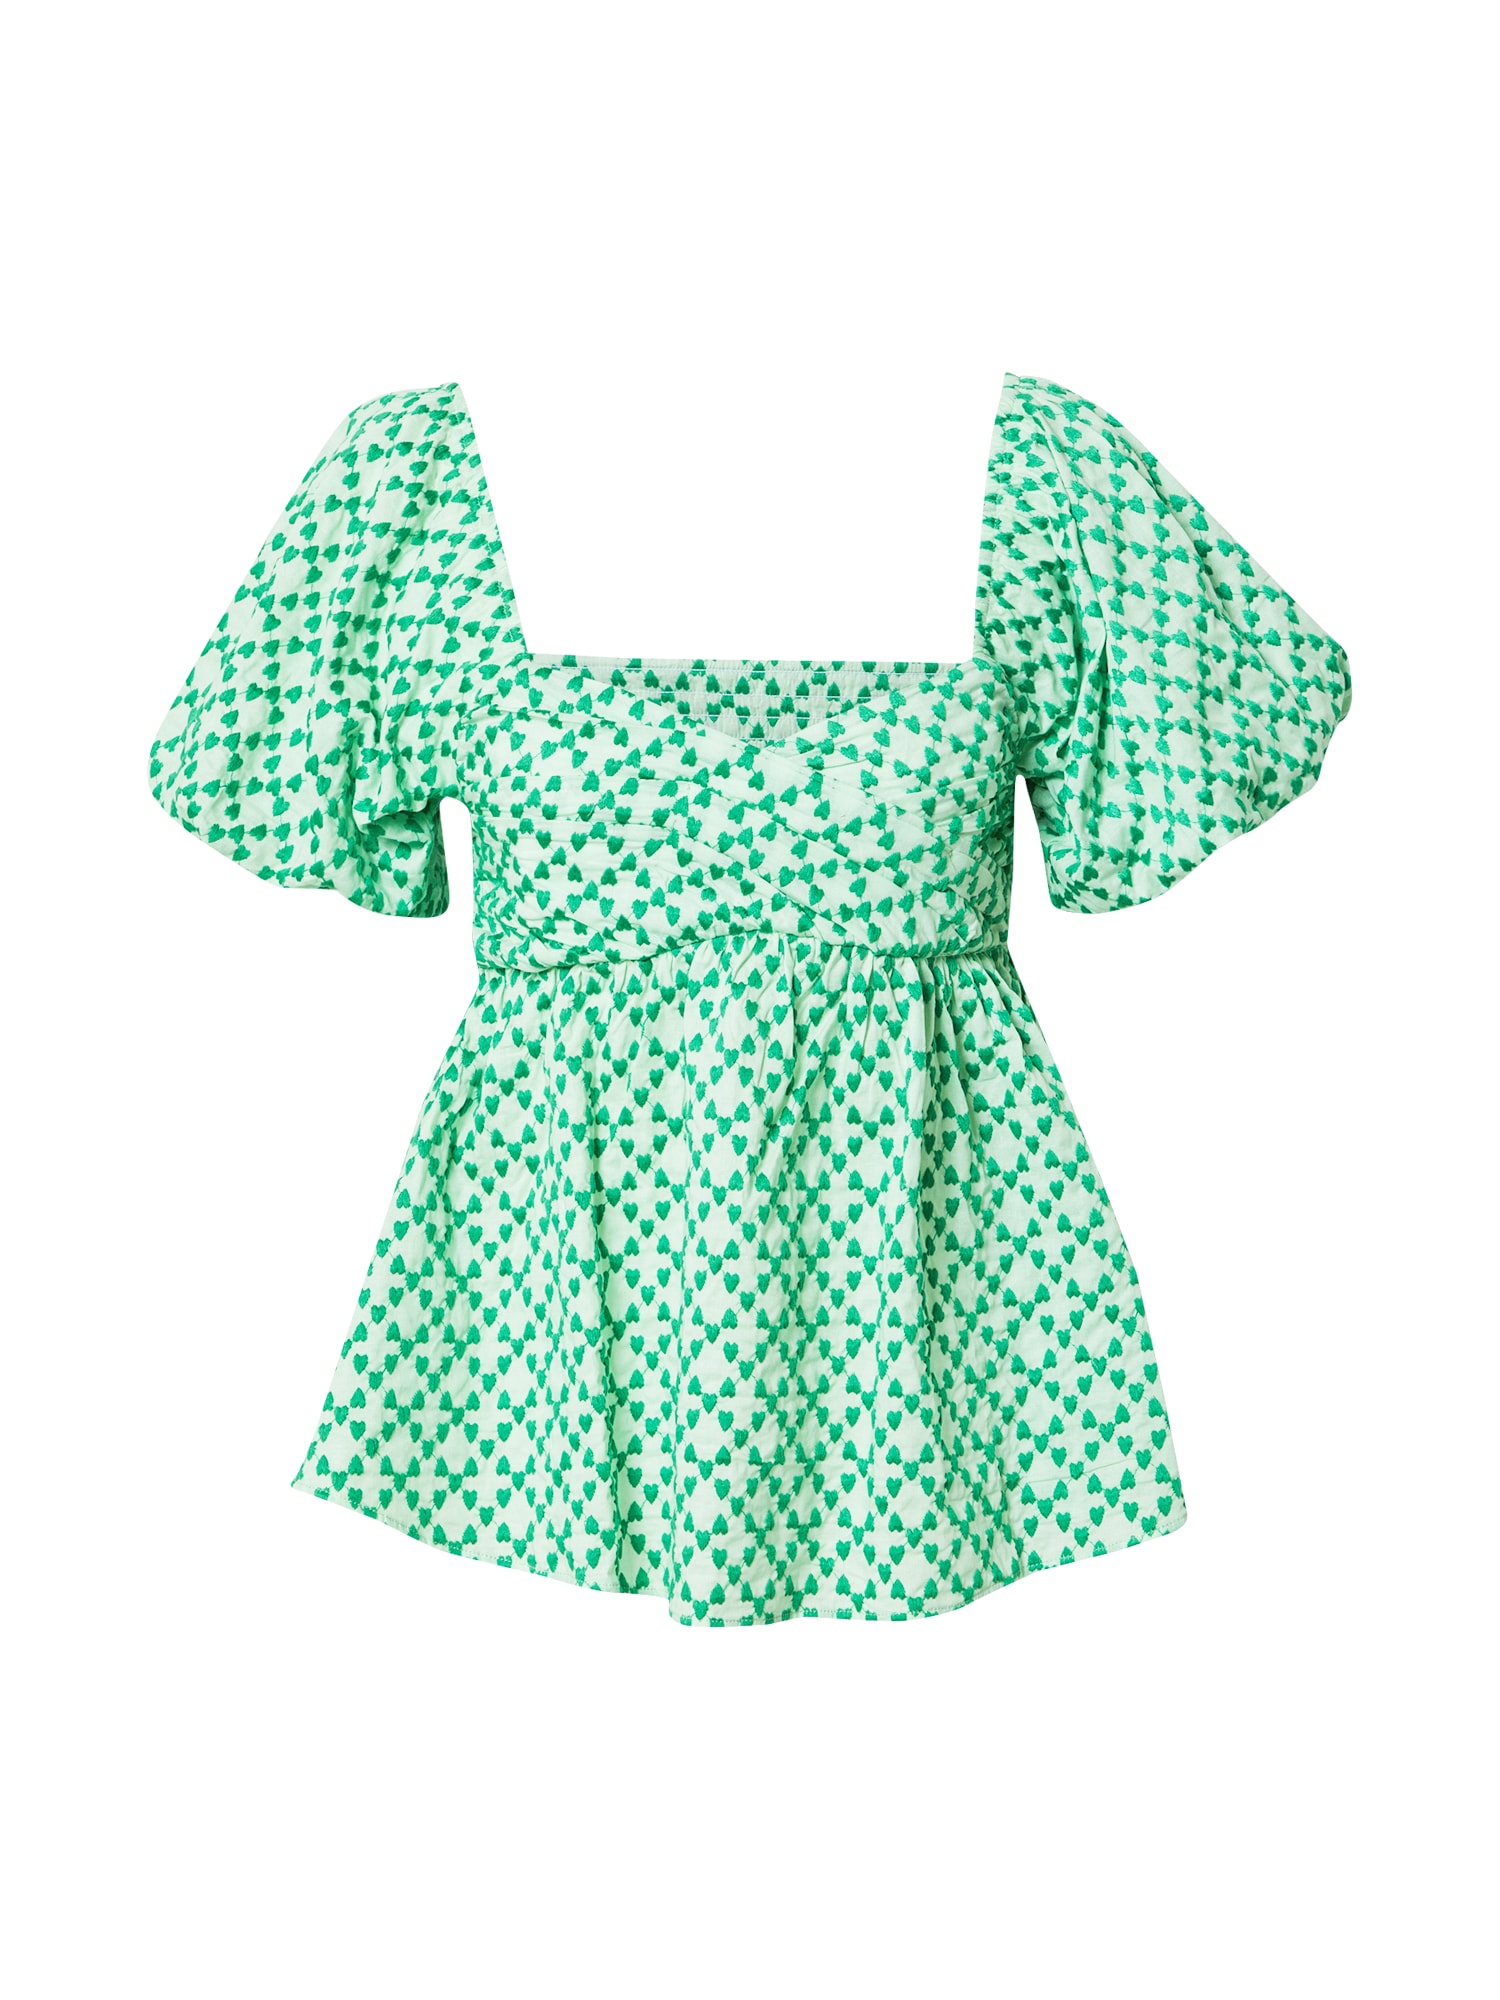 Hofmann Copenhagen Marškinėliai 'Michelle' žolės žalia / pastelinė žalia